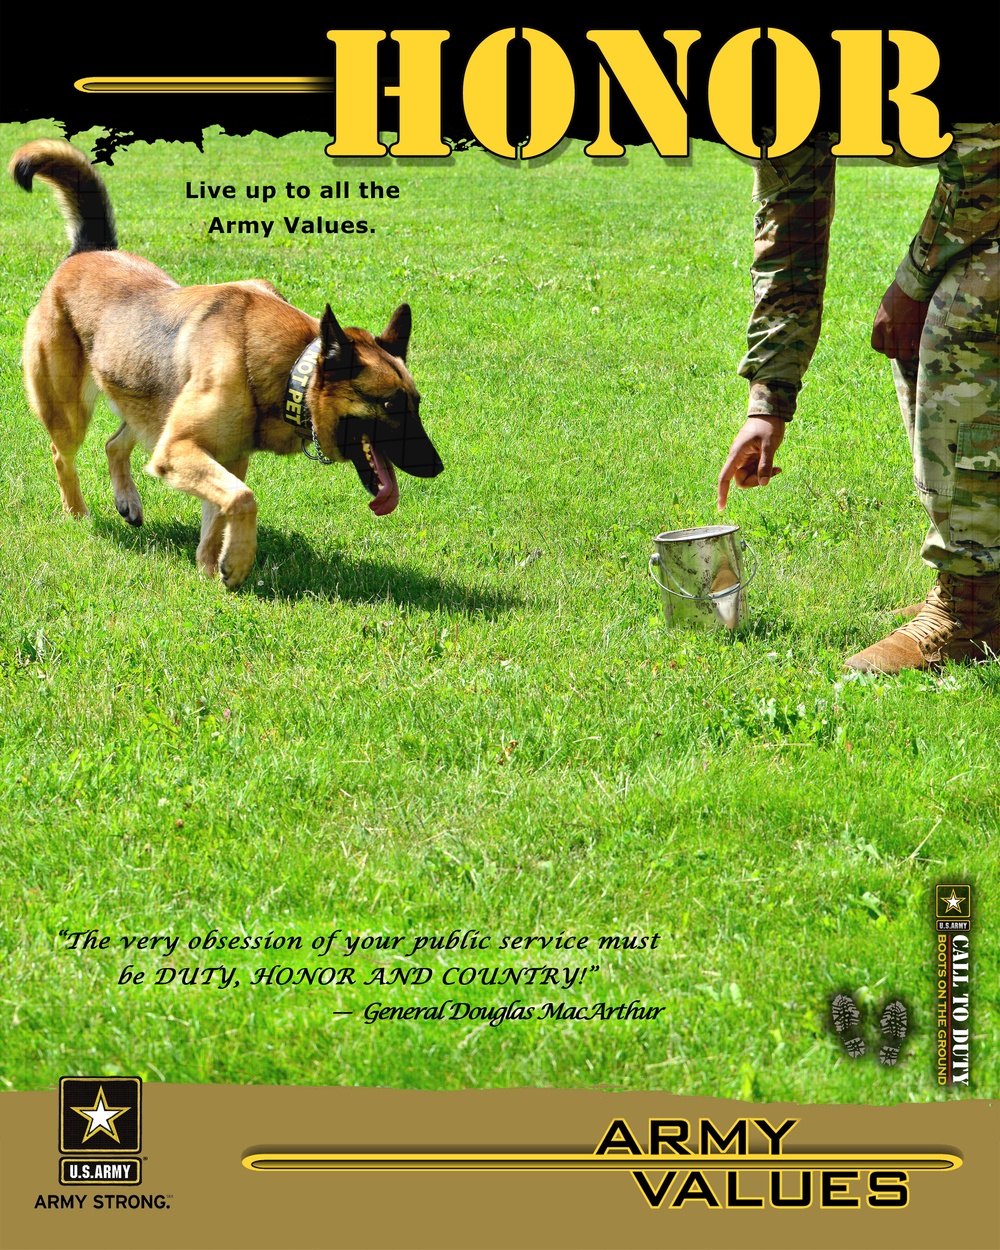 Army Values - Honor